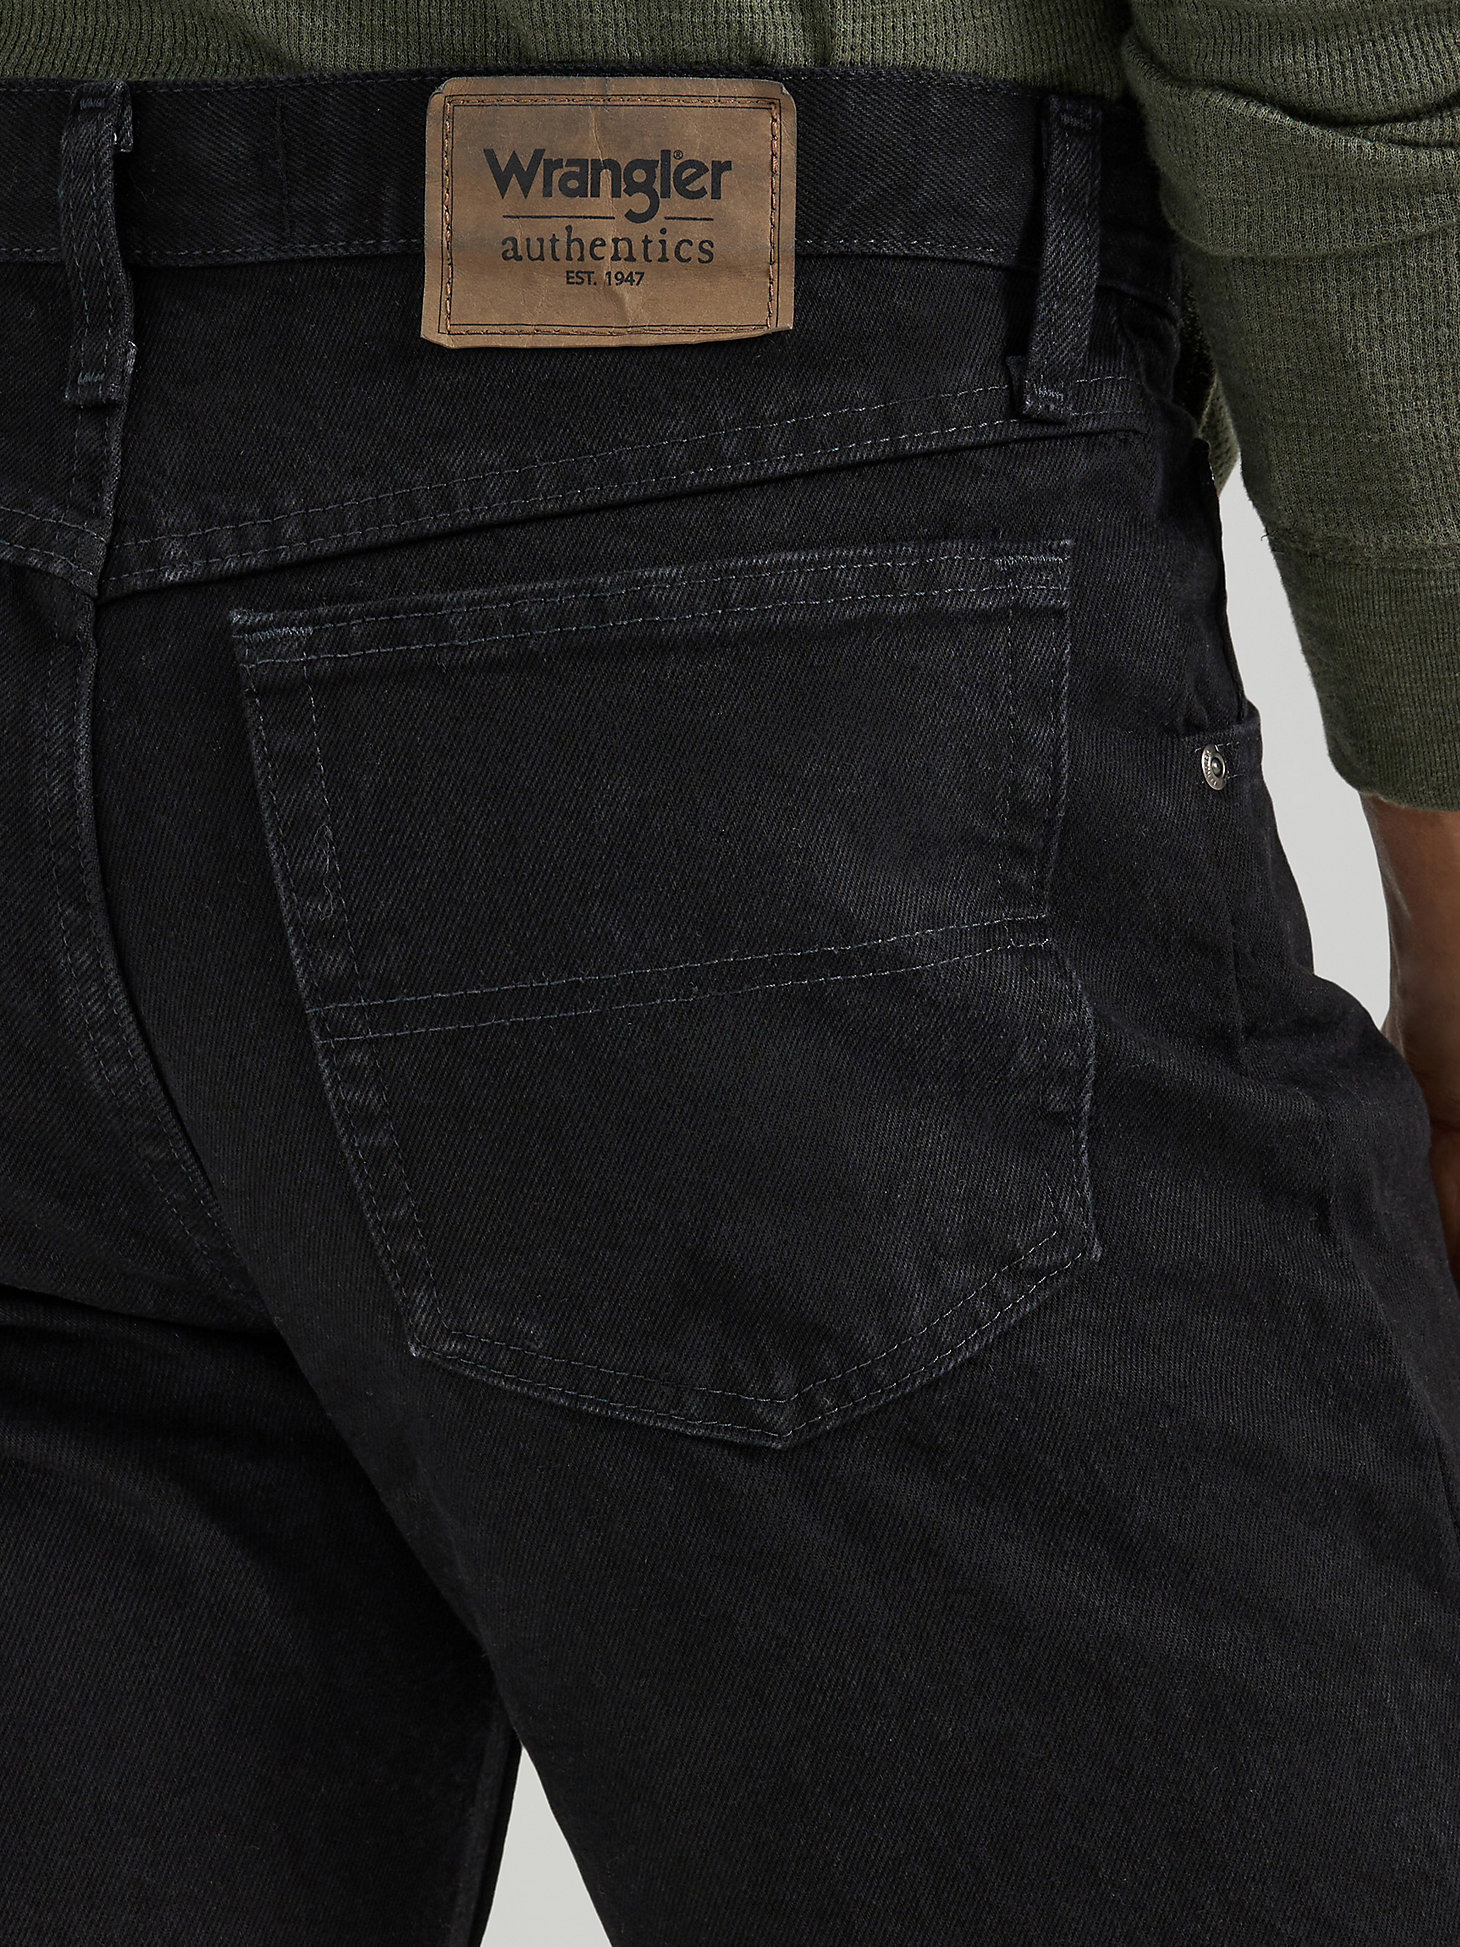 Men's Wrangler Authentics® Regular Fit Cotton Jean in Black alternative view 2